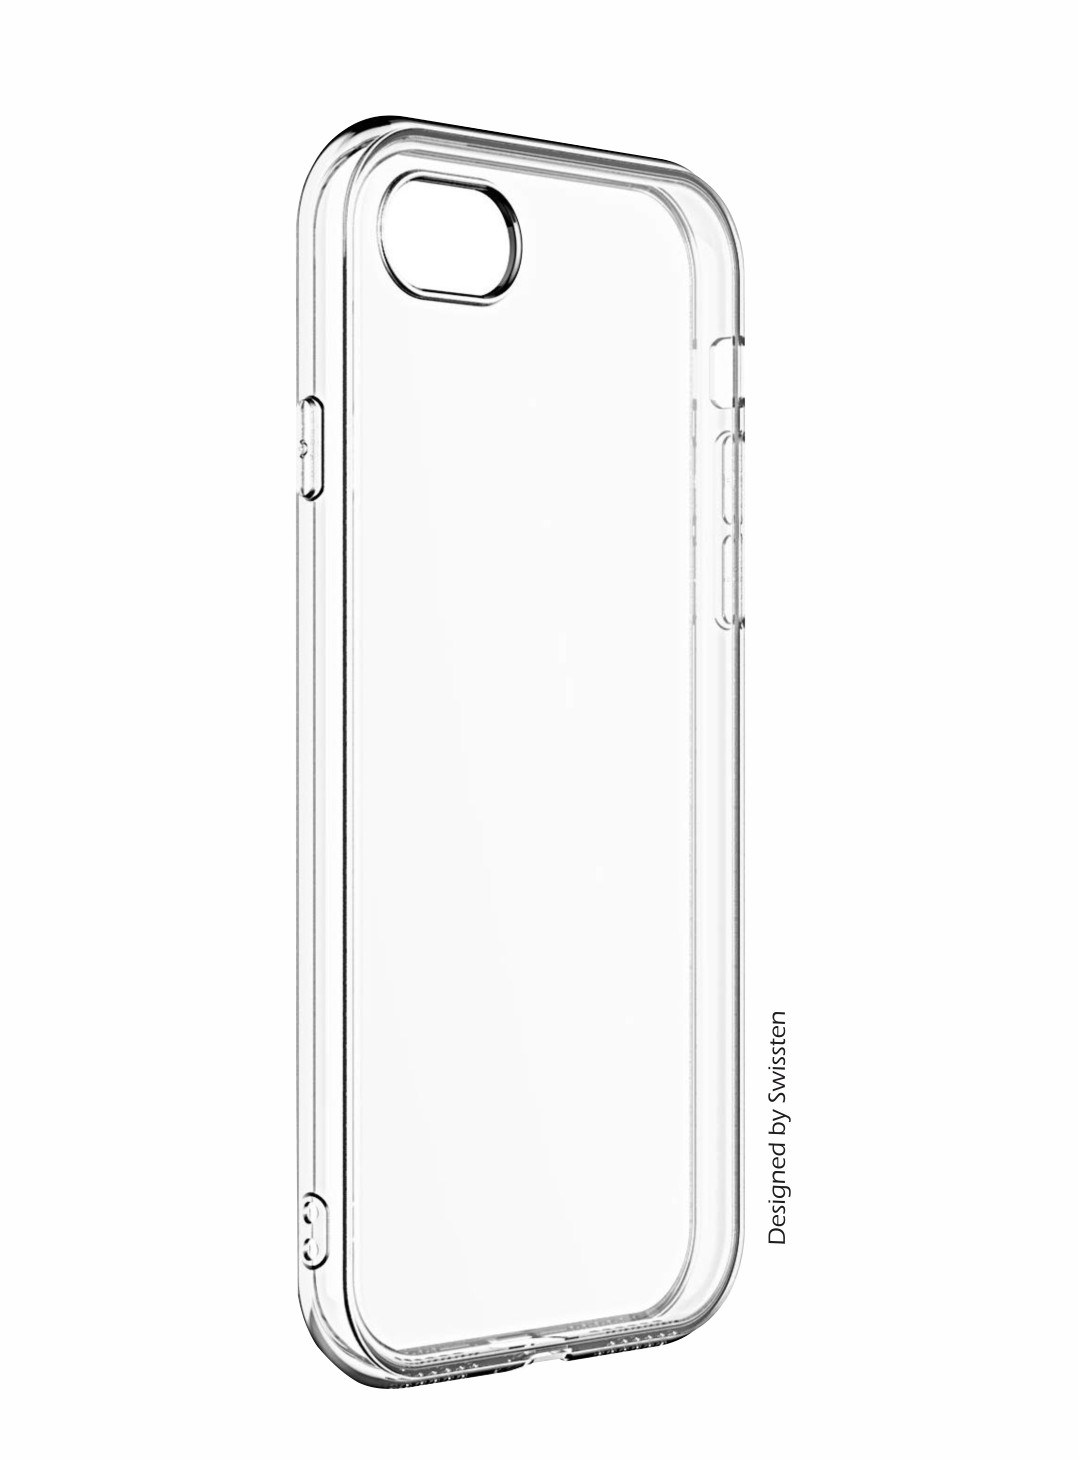 Swissten Clear Jelly Apple iPhone XS/X transparent thumb